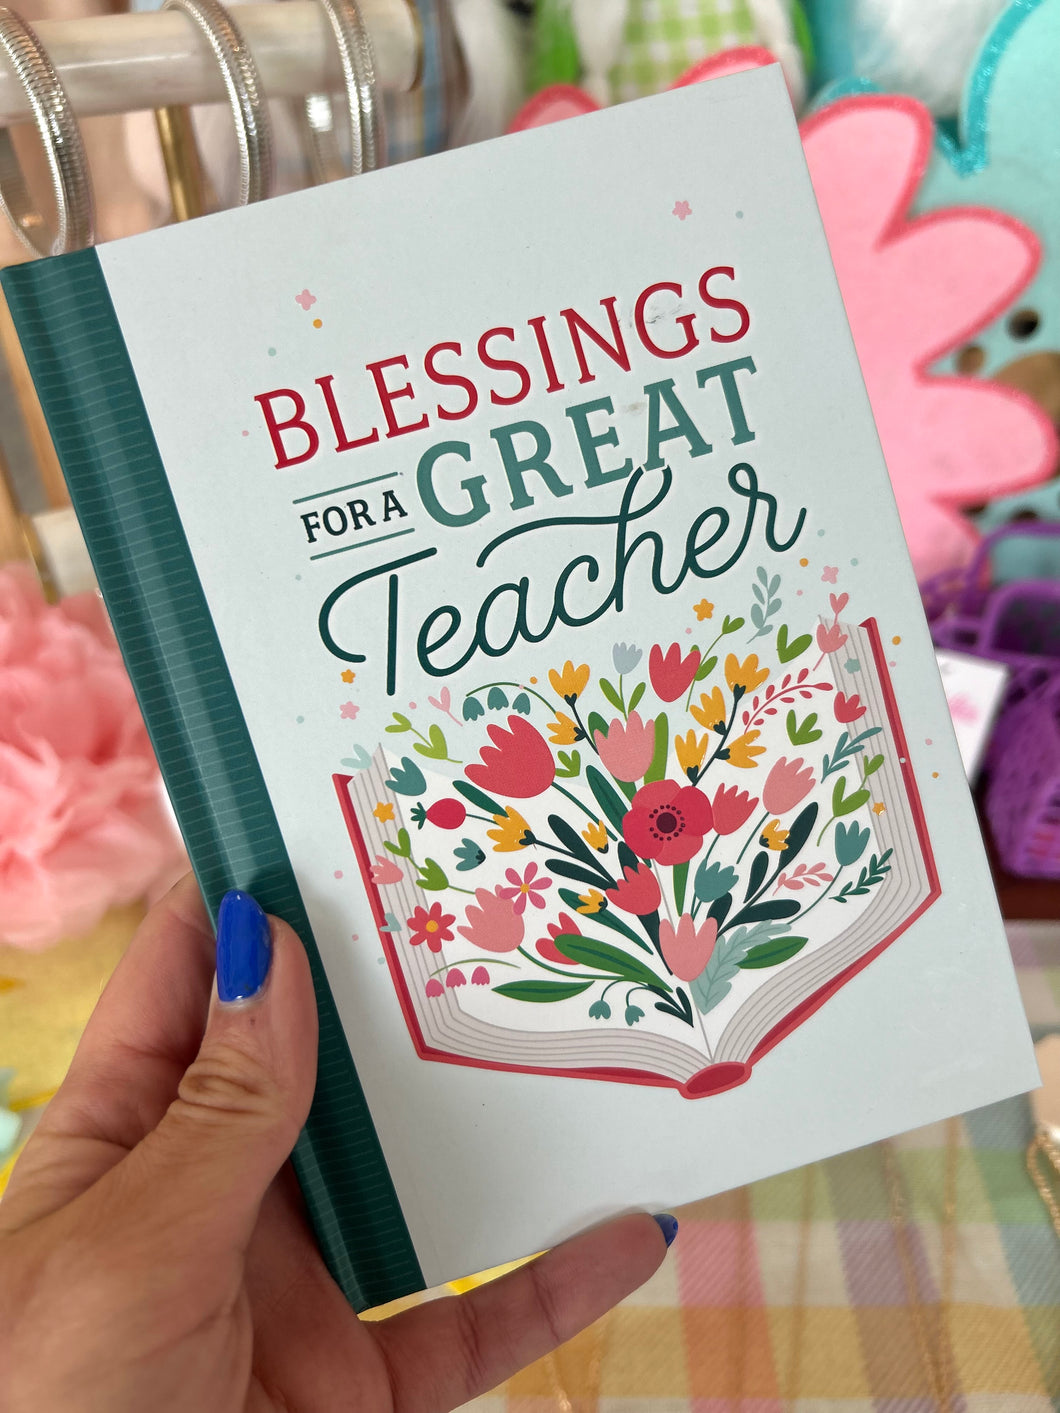 blessings for a great teacher